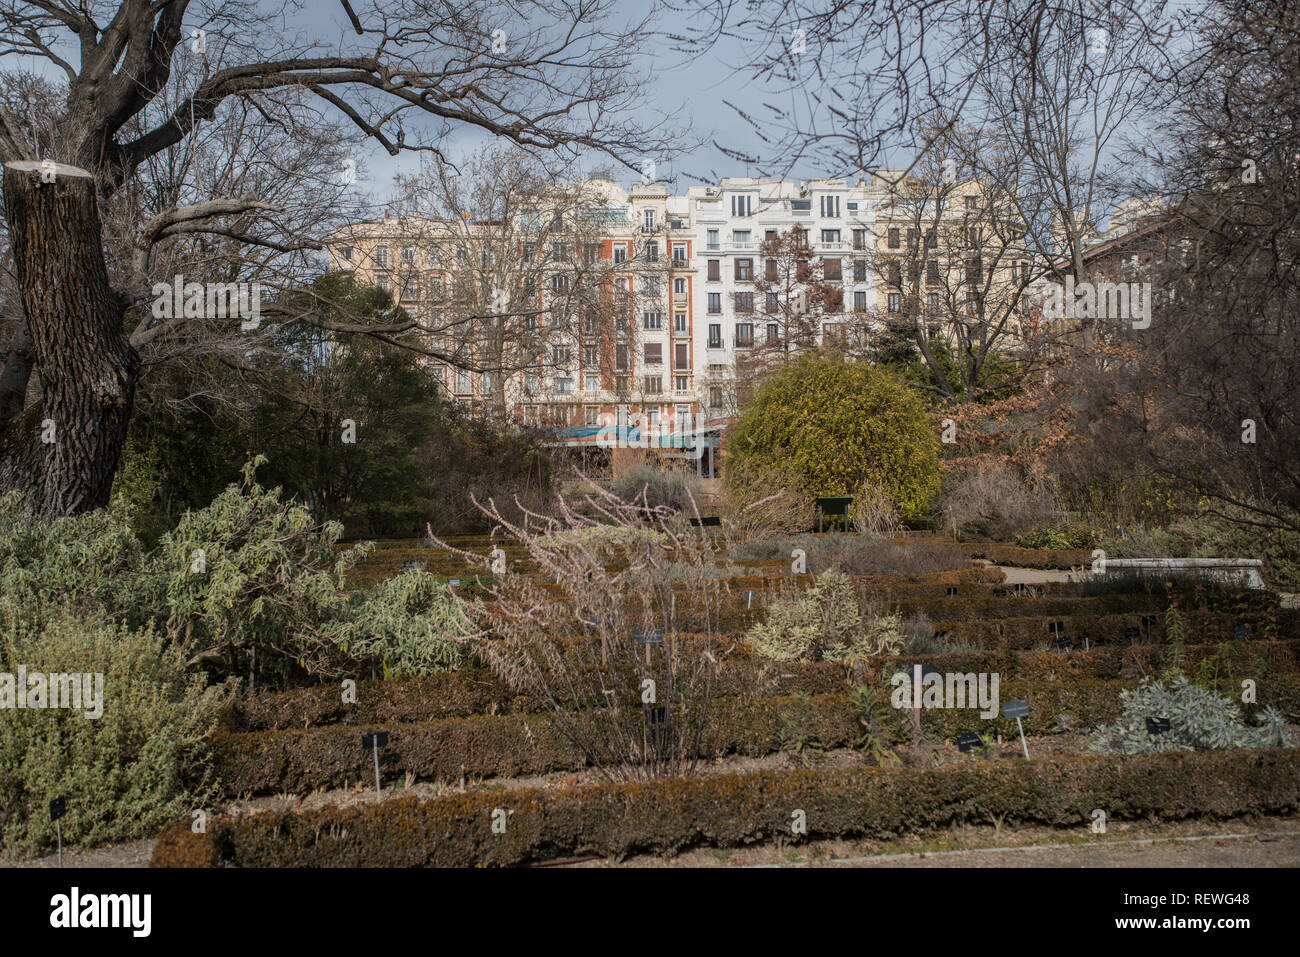 Real Jardin Botanico, Madrid, January 2019 Stock Photo